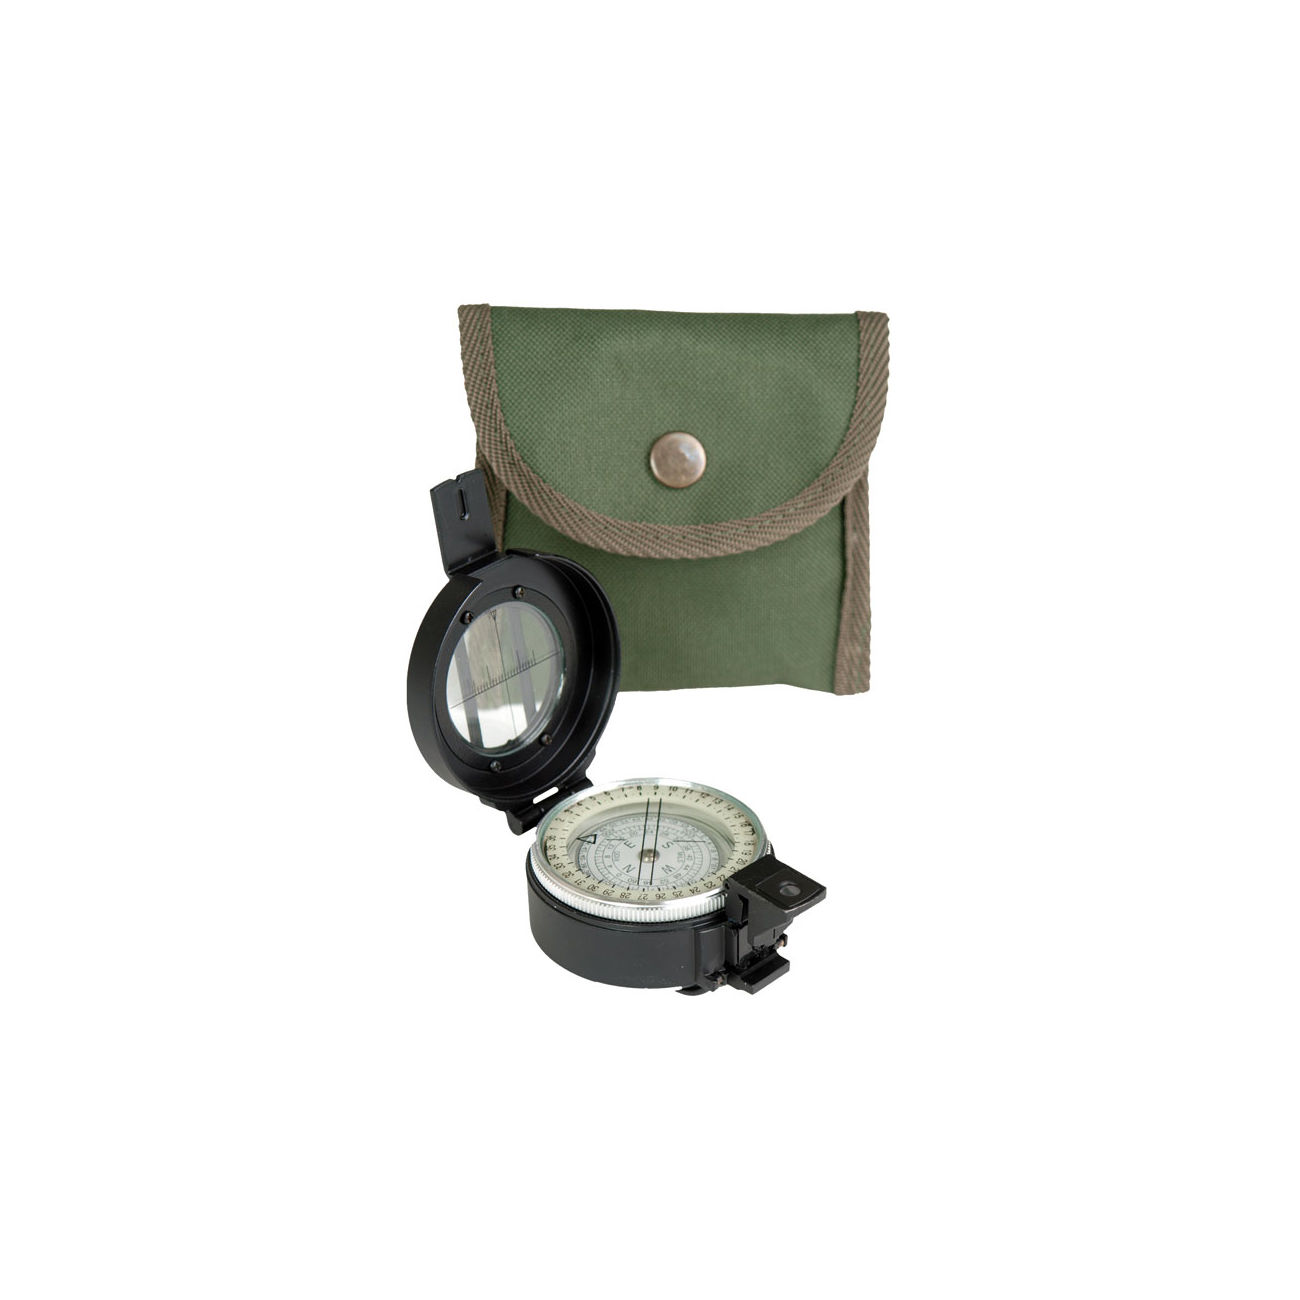 Mil-Tec Kompass Britisch Lensatic Repro